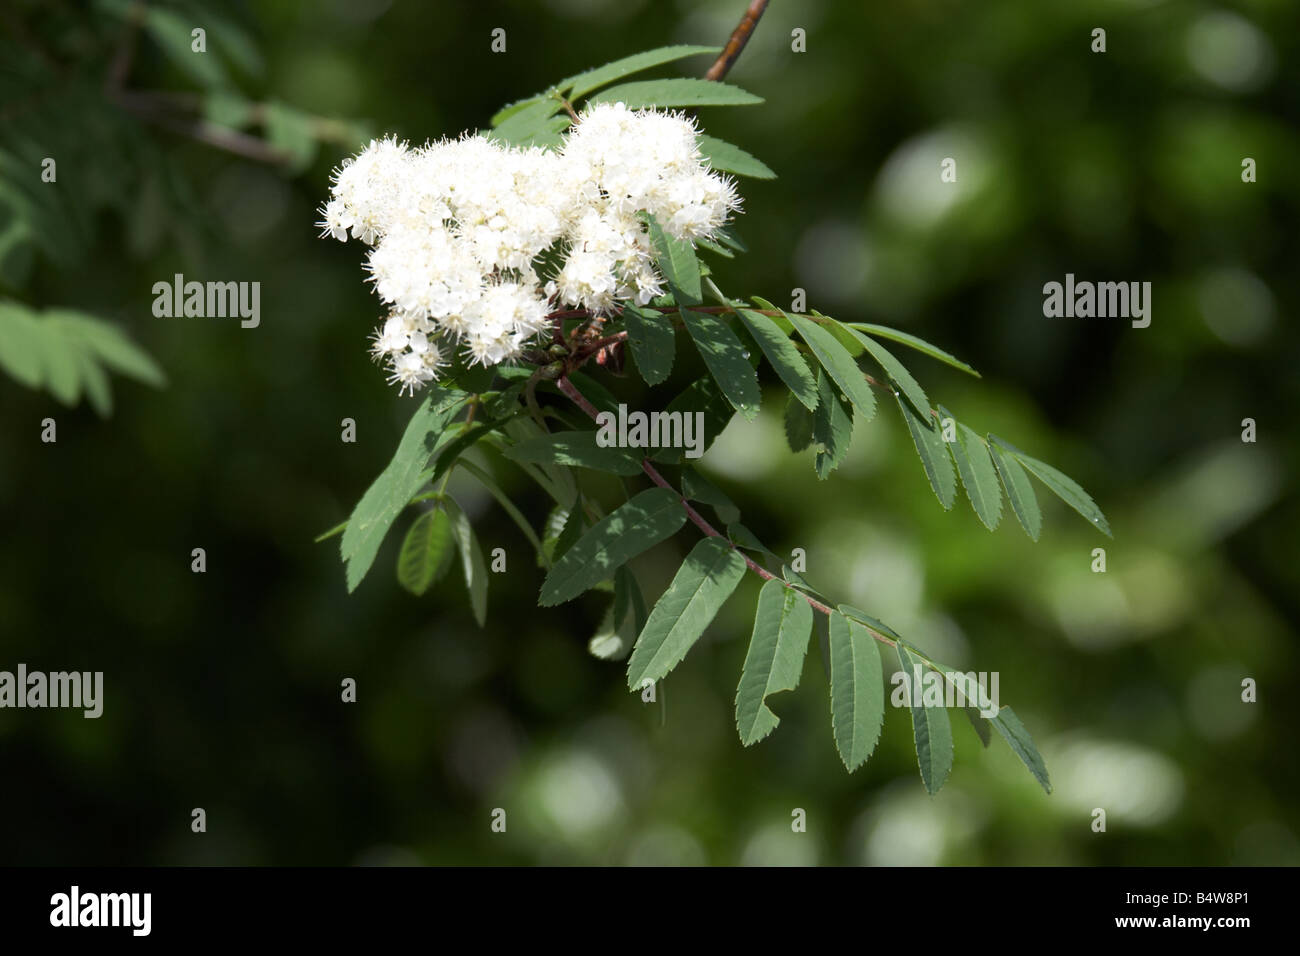 Flower of common ash tree London N10 England Stock Photo - Alamy